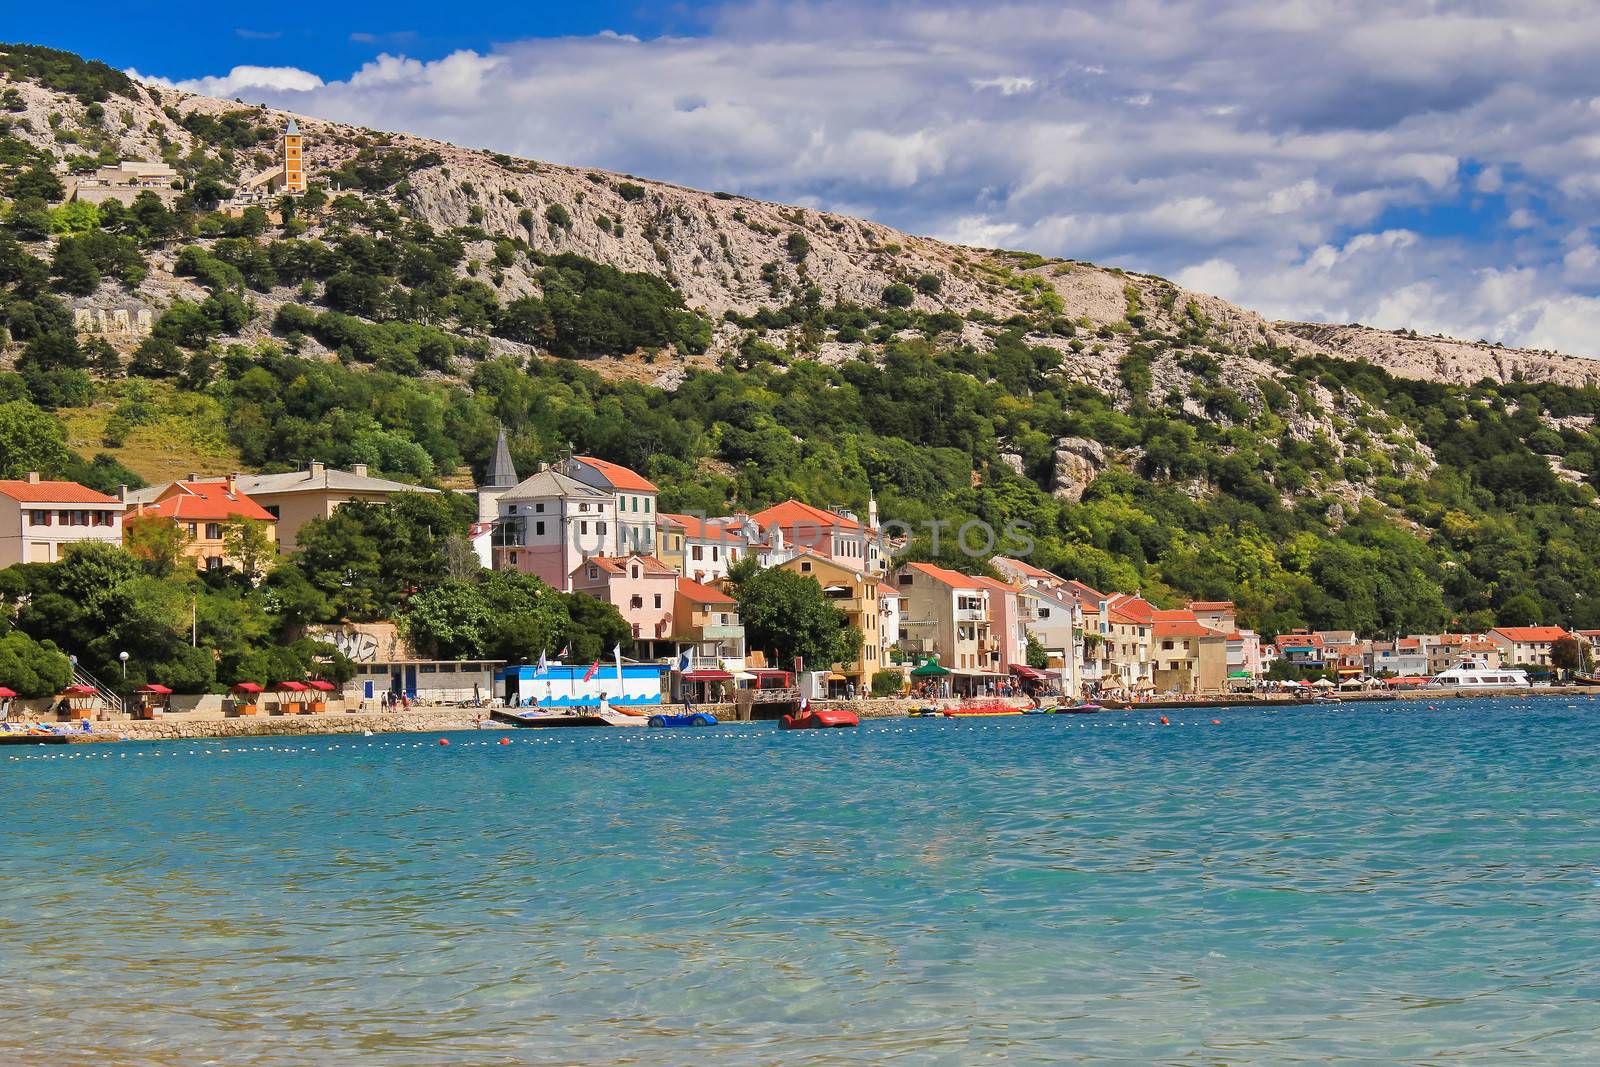 Adriatic town of Baska waterfront and beach, Island of Krk, Croatia